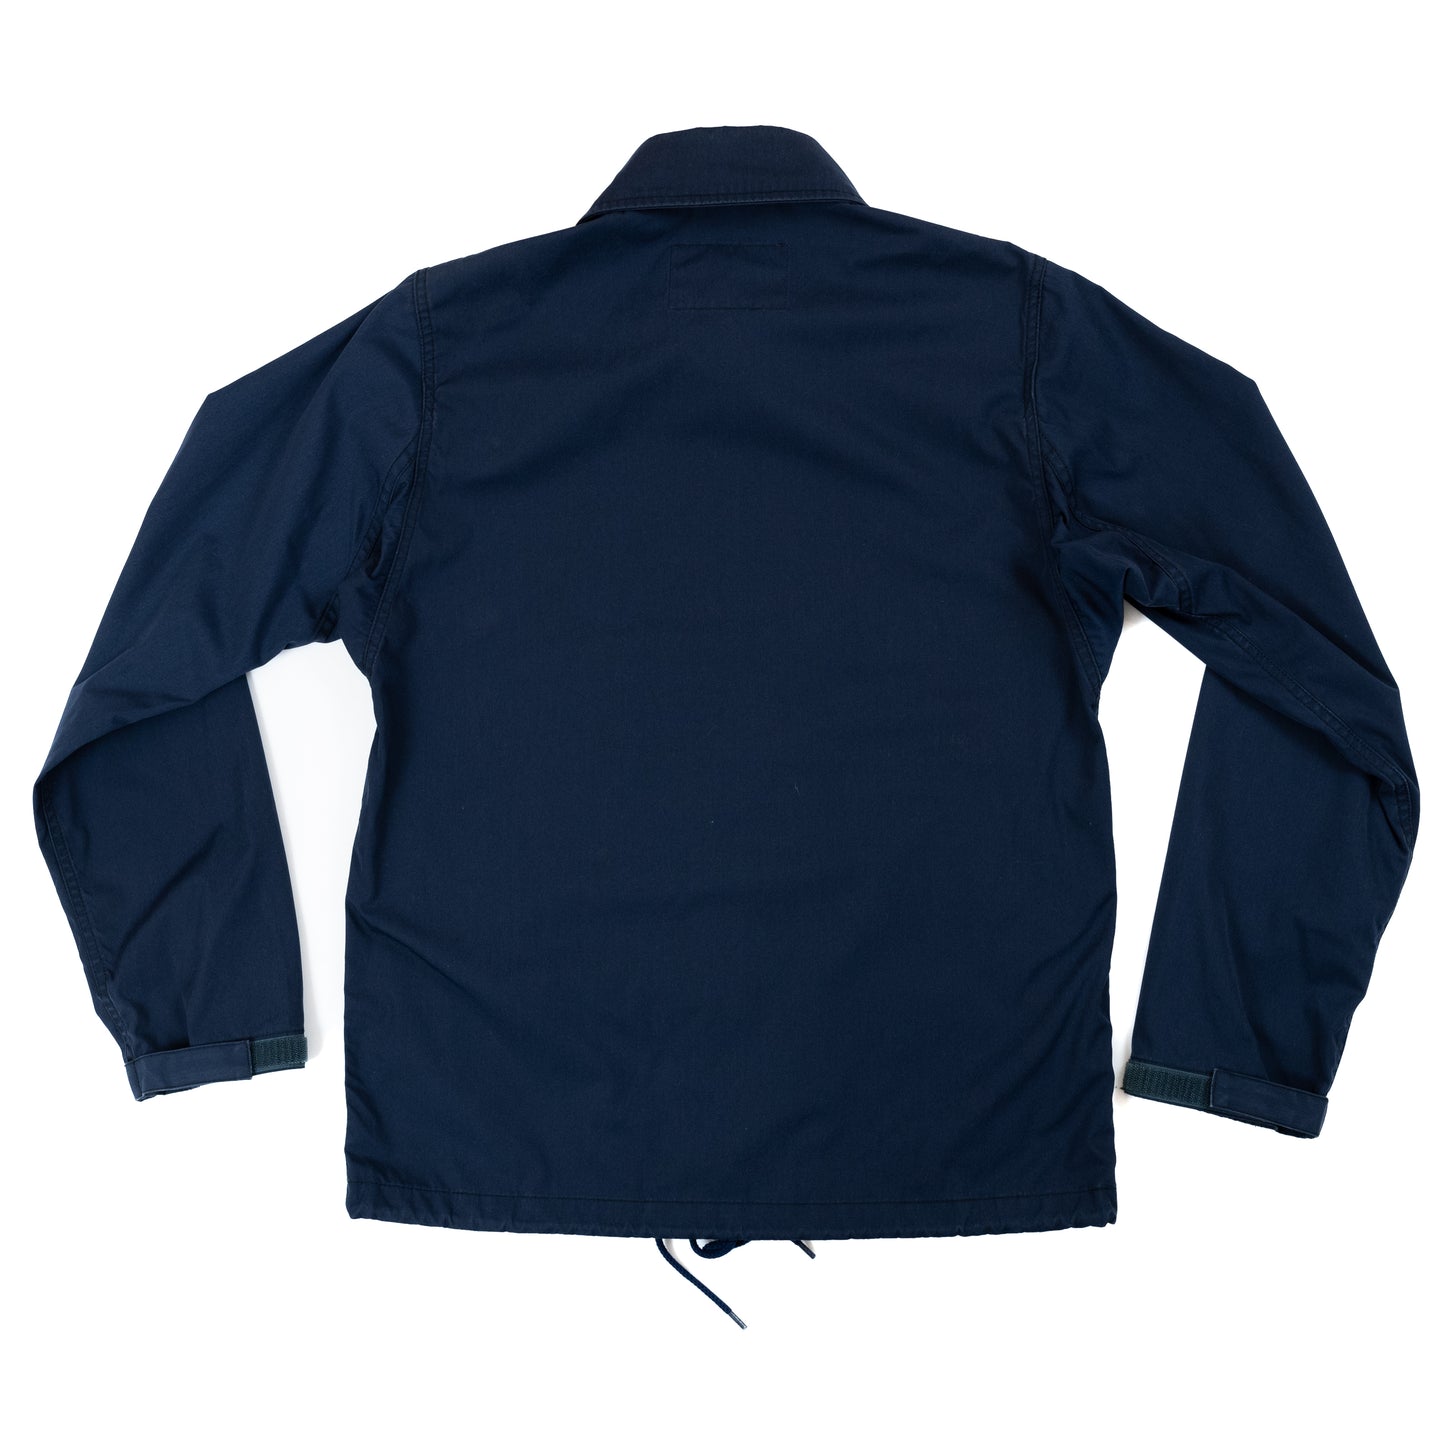 The North Face Purple Label 65/35 Bayhead Cloth Coach Jacket